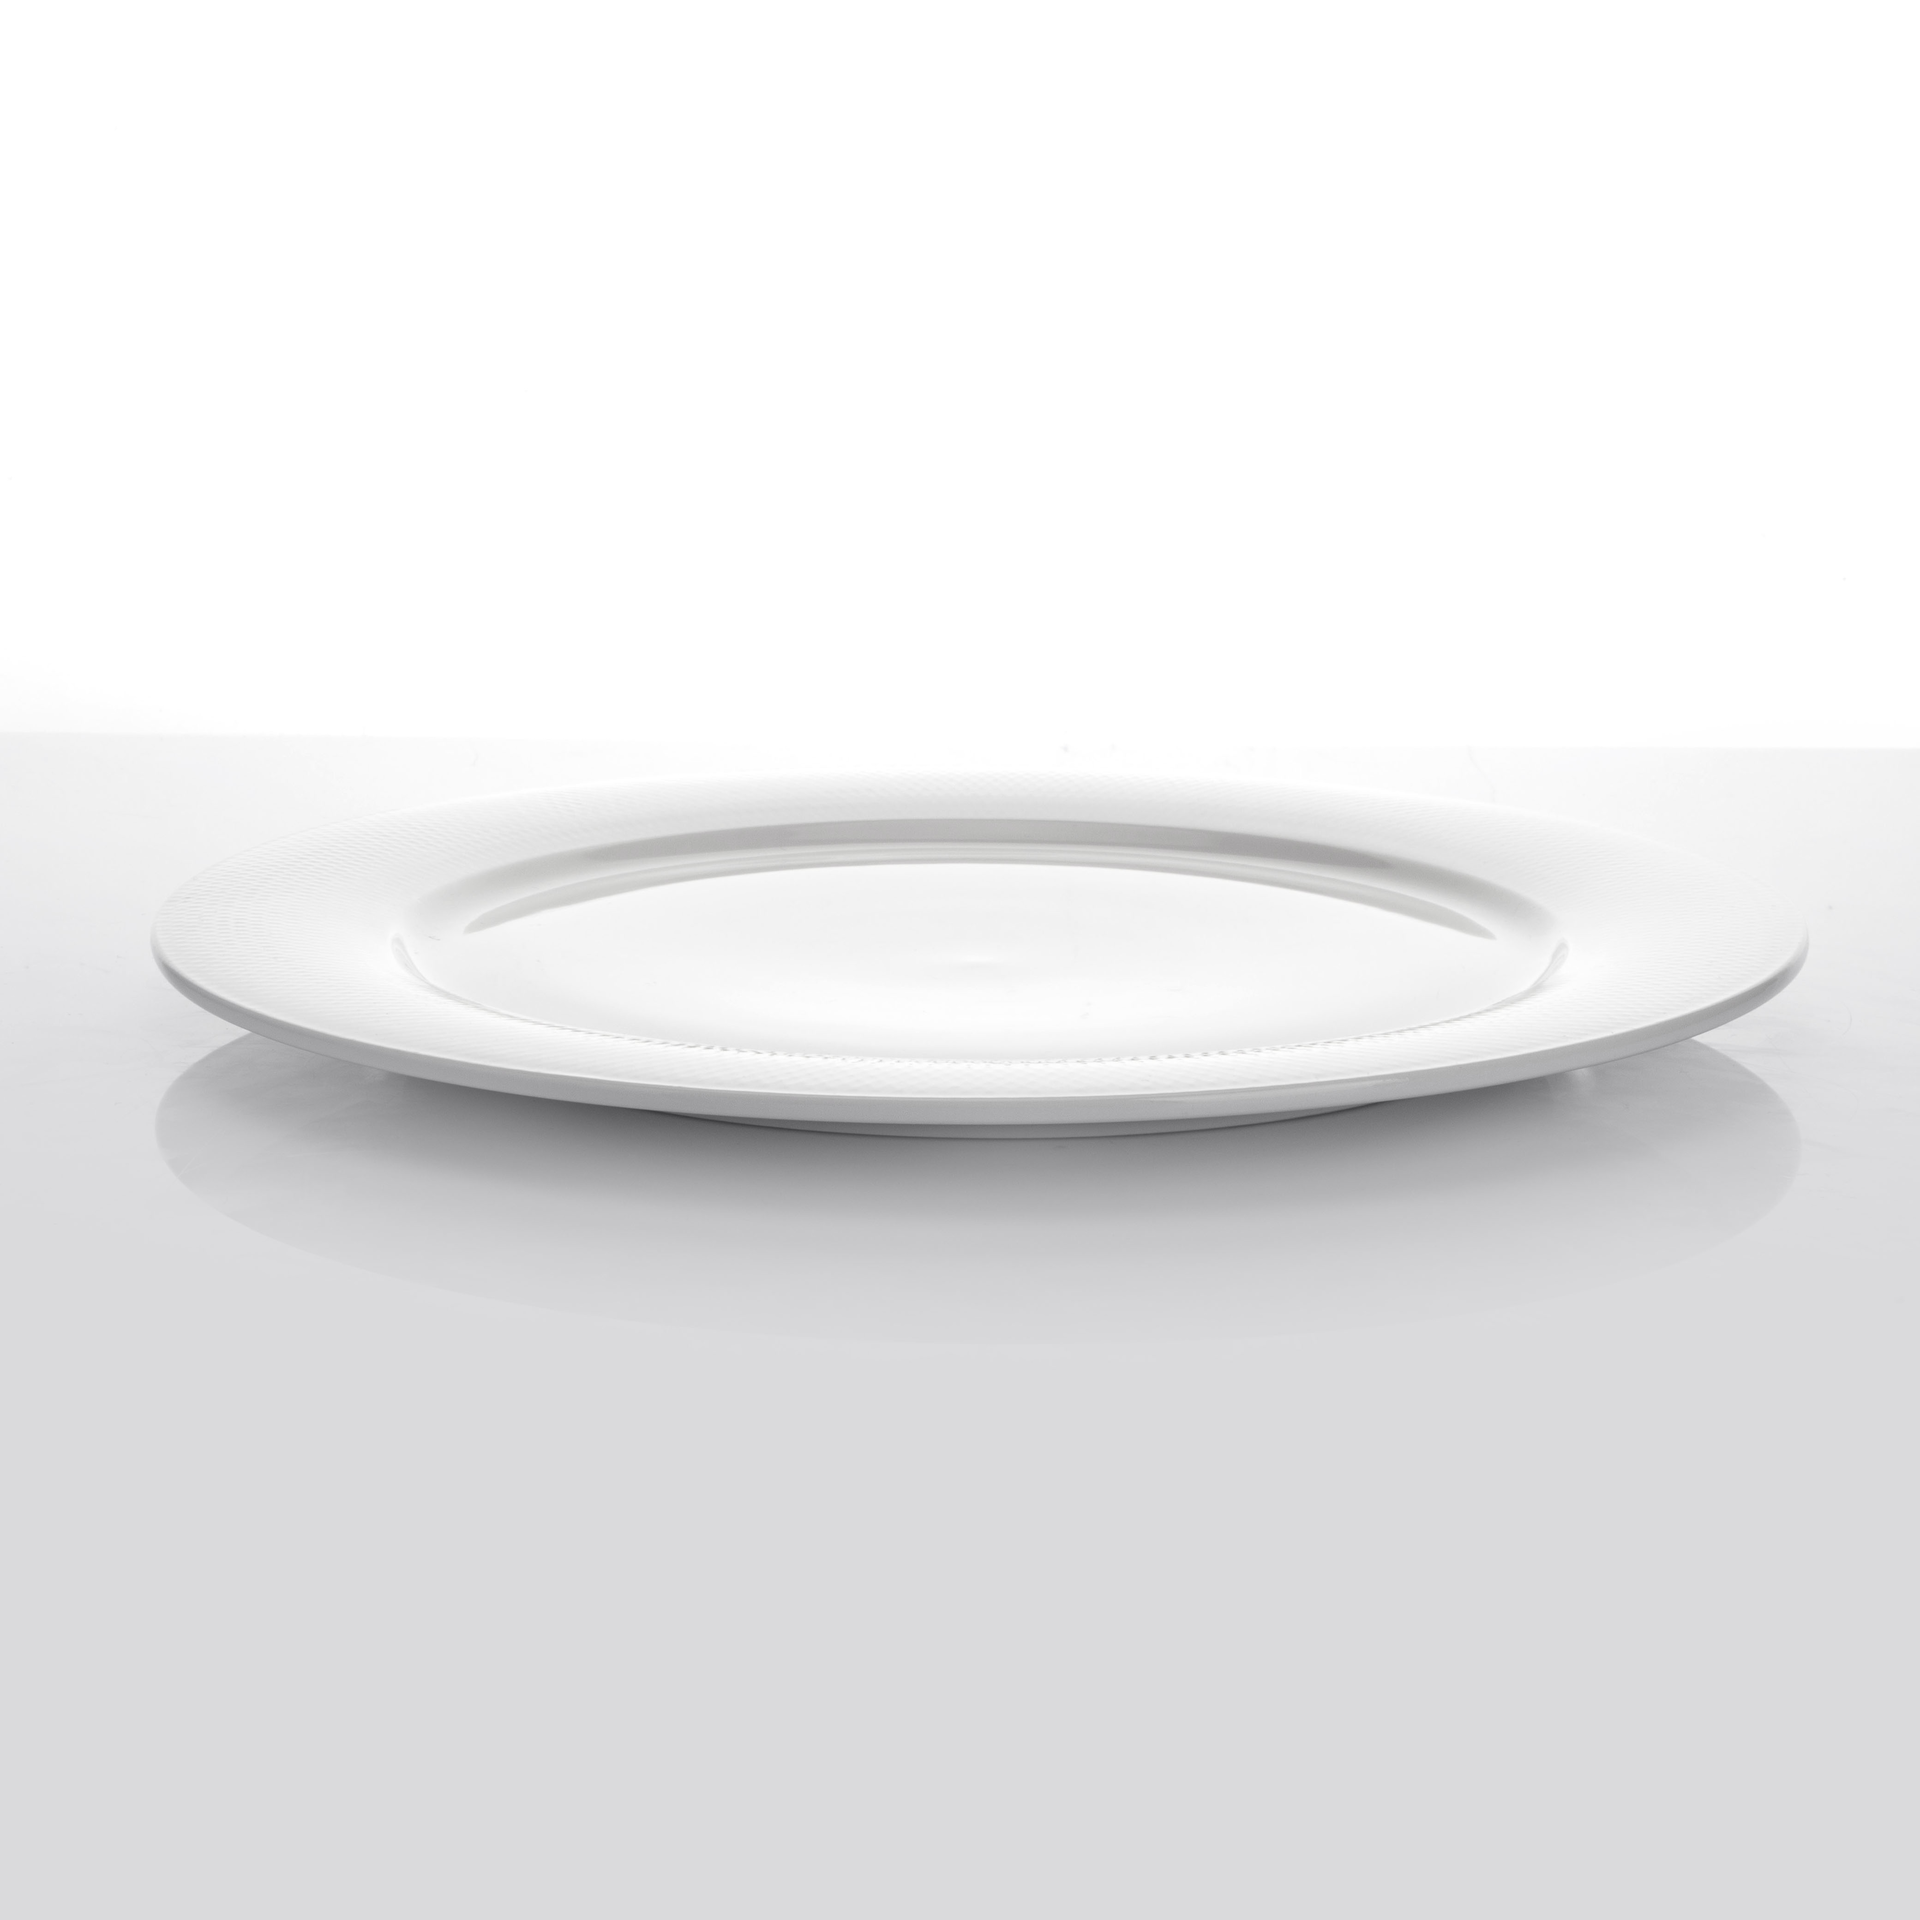 White Round Plates Ceramic Dinner,Ceramic Plates Restaurant Dinner Party , Eco Plate Set Manufacturer